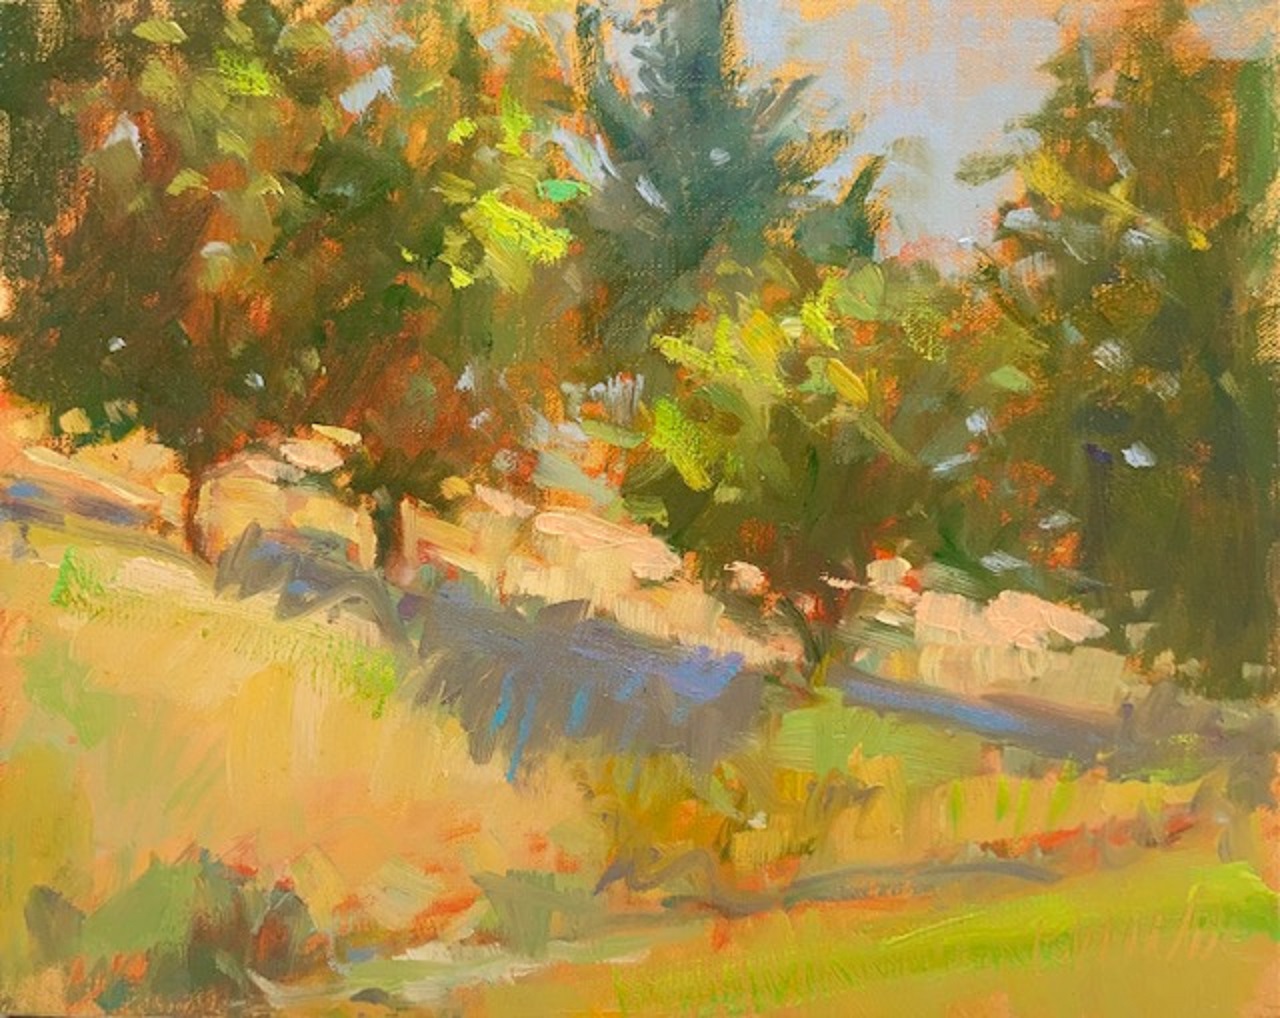 8. Barbara Walker, “Summer Meadow,” 2022, oil, 8 x 10 in., Available from artist, Plein air